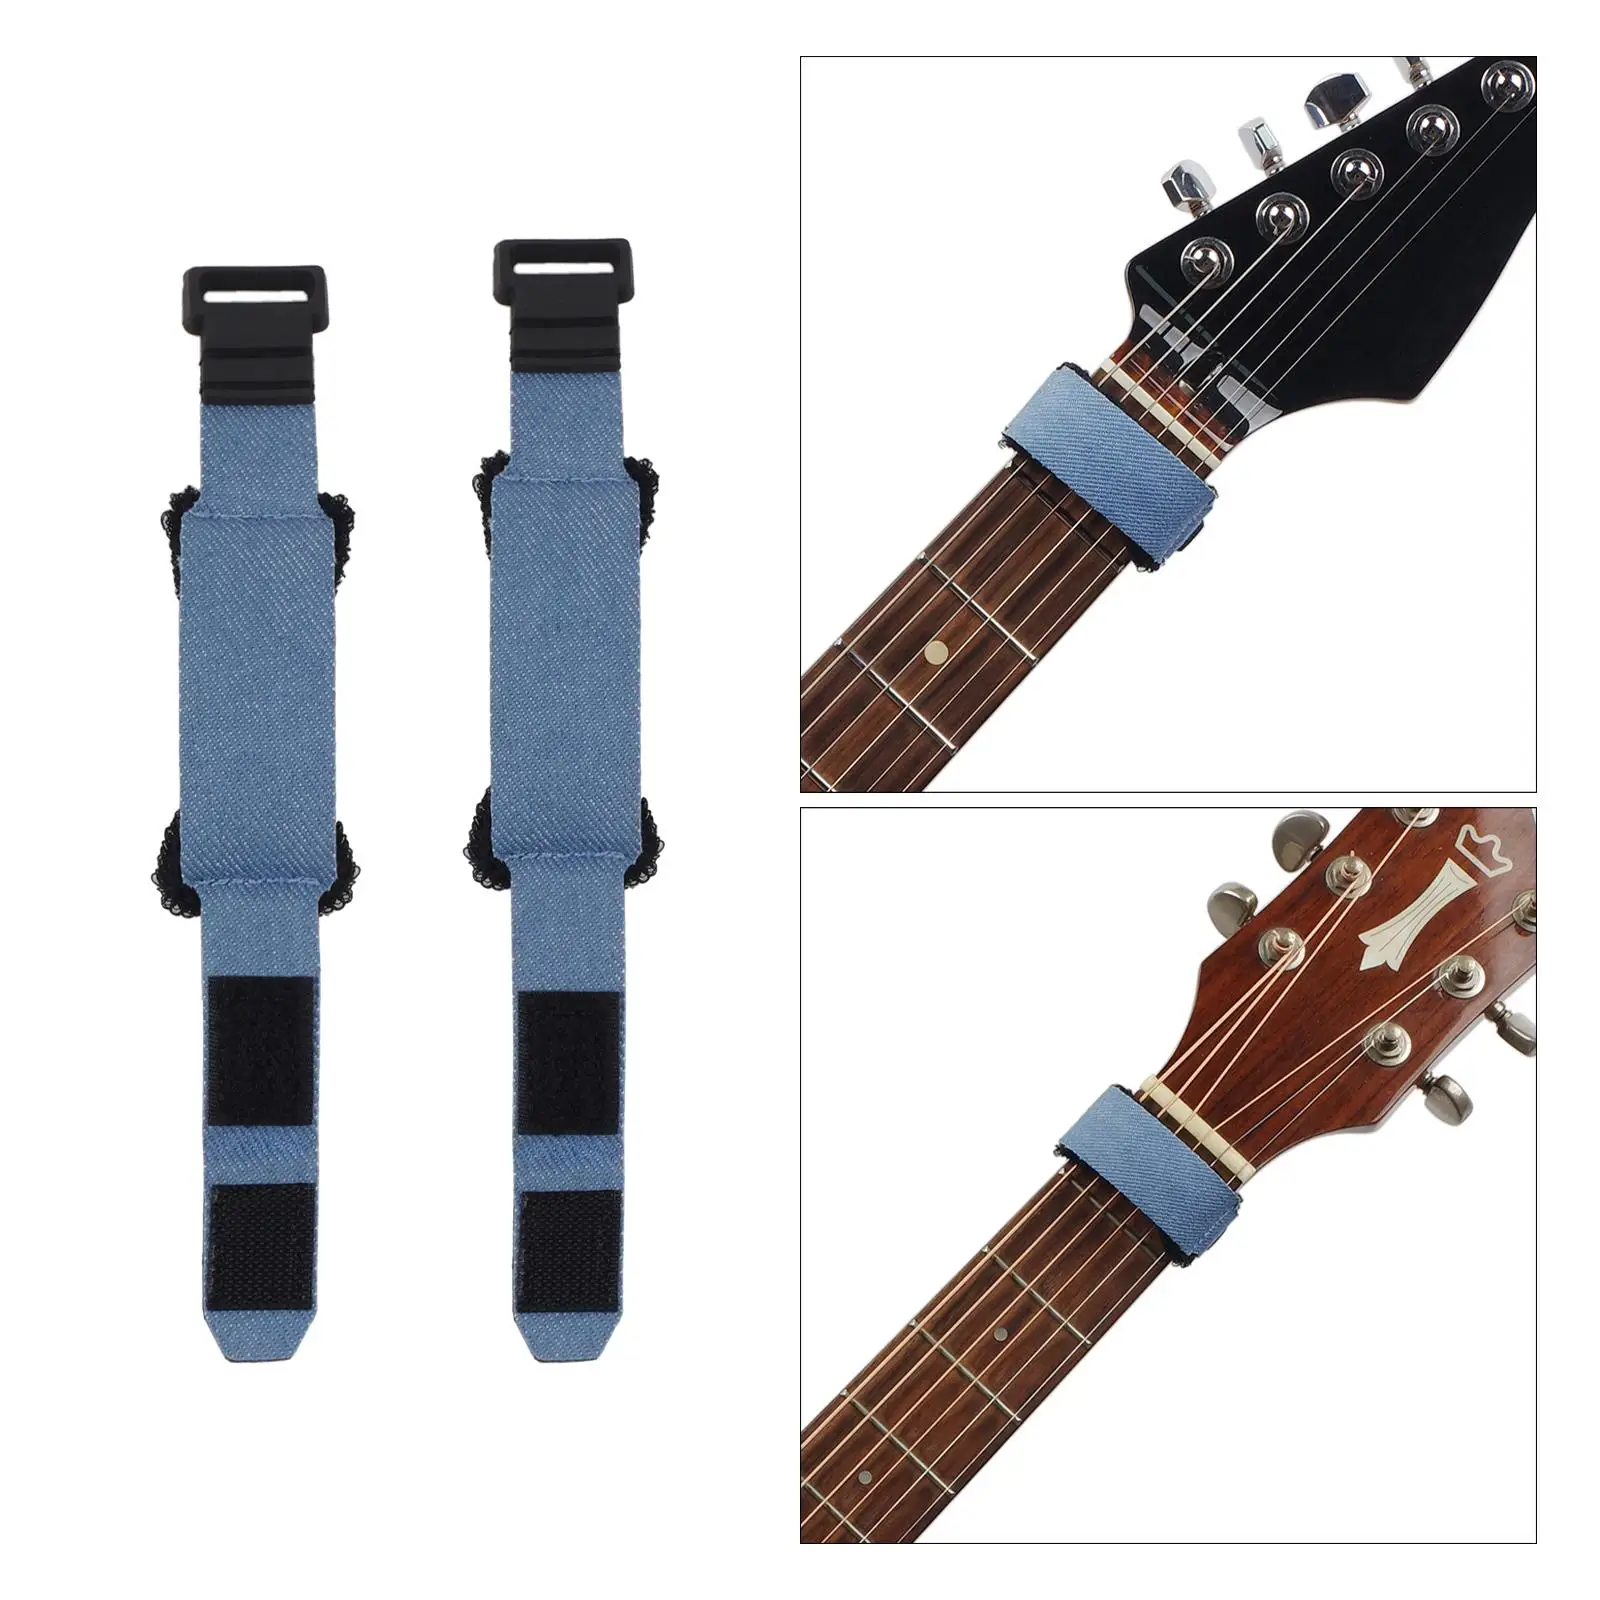 Bass Guitar Strings Mute Fretboard Mute Straps Damper Universal Adjustable